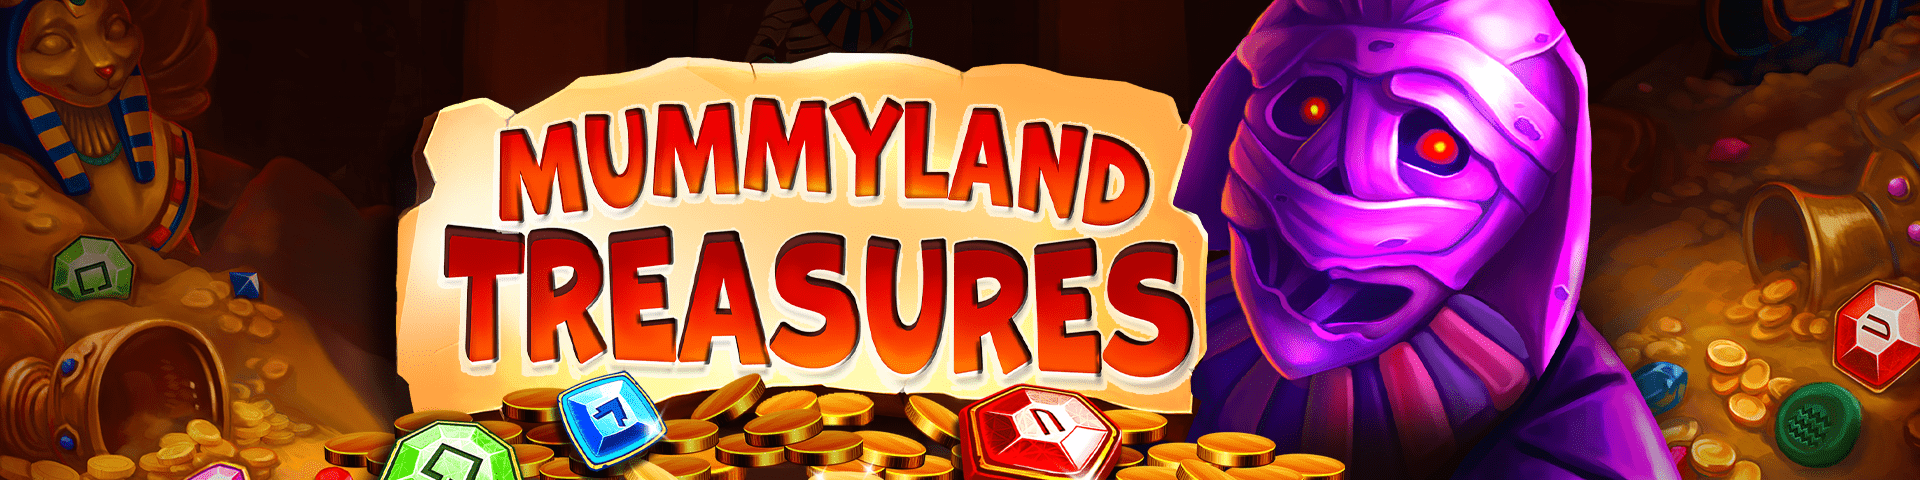 MummyLand Treasures